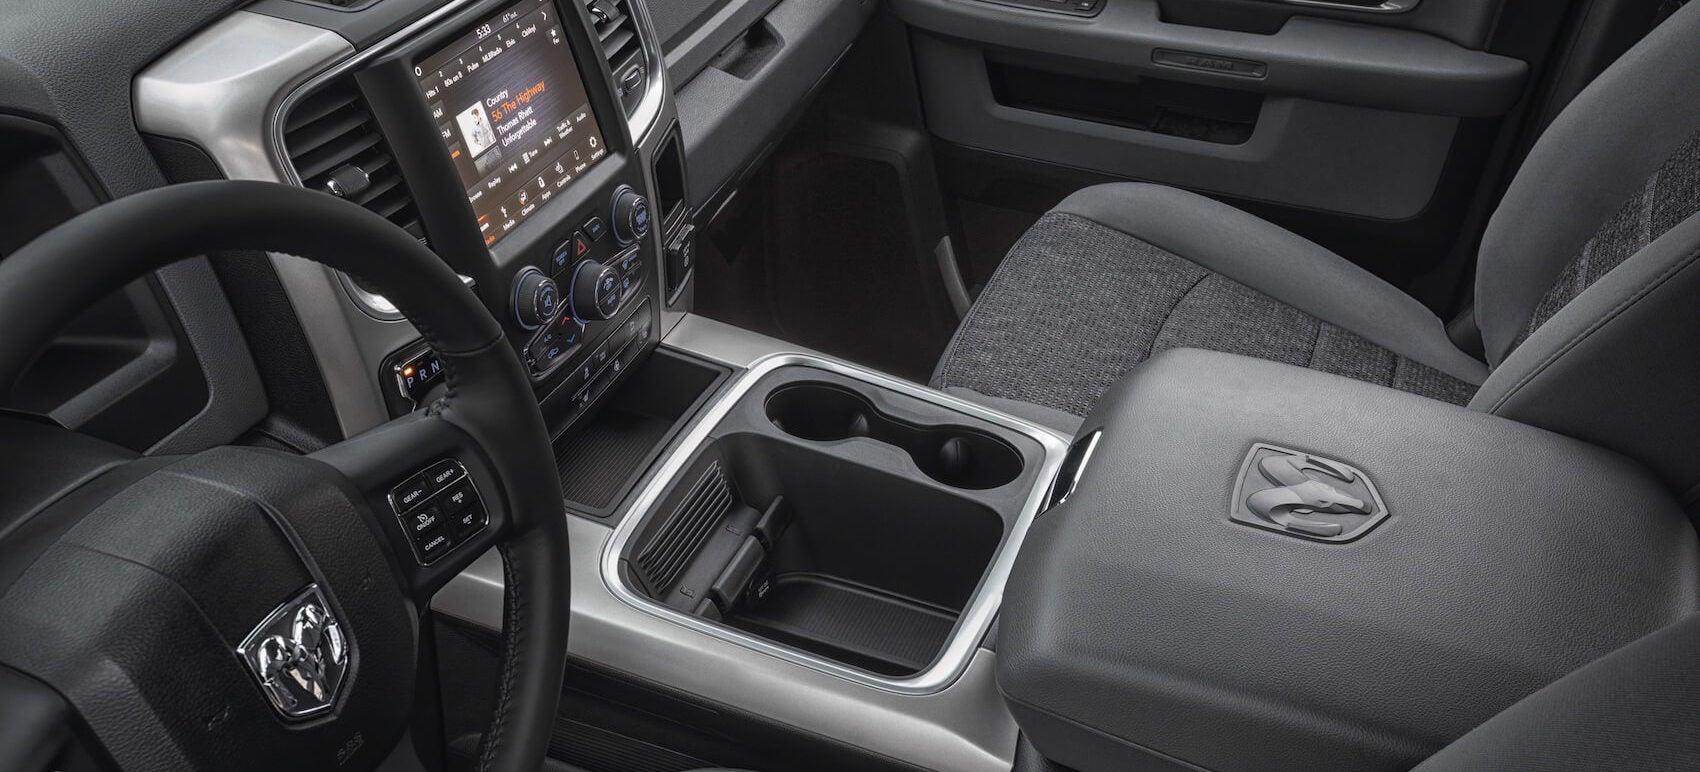 2020 Ram 1500 interior review Scranton, PA